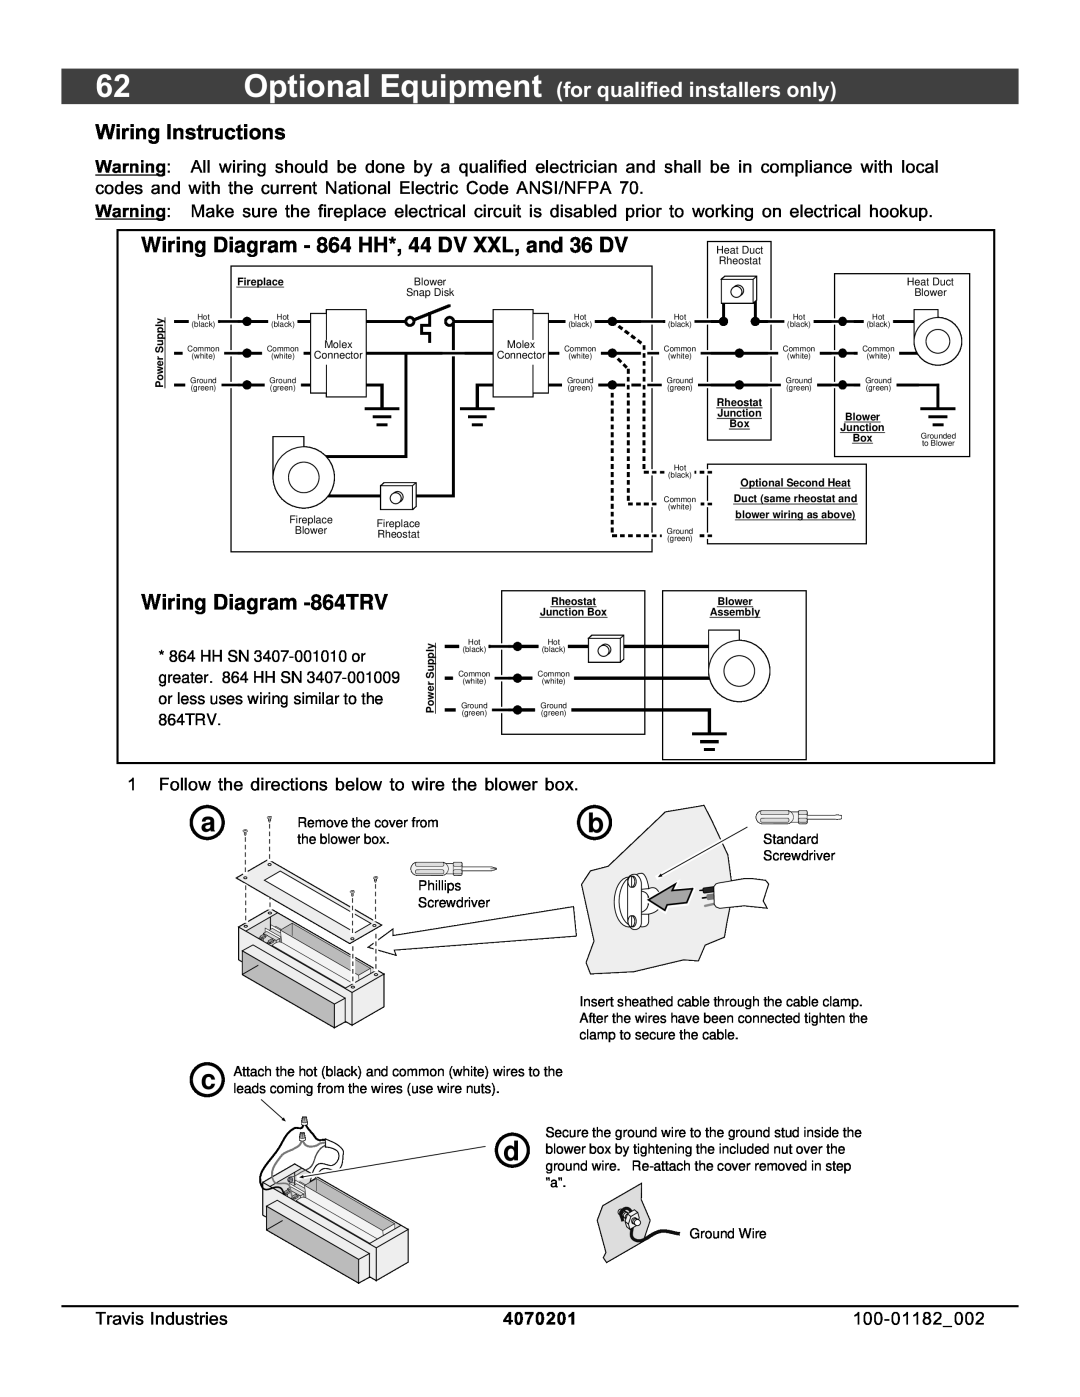 North Star Wiring Instructions, Wiring Diagram - 864 HH*, 44 DV XXL, and 36 DV, Wiring Diagram -864TRV, 4070201 